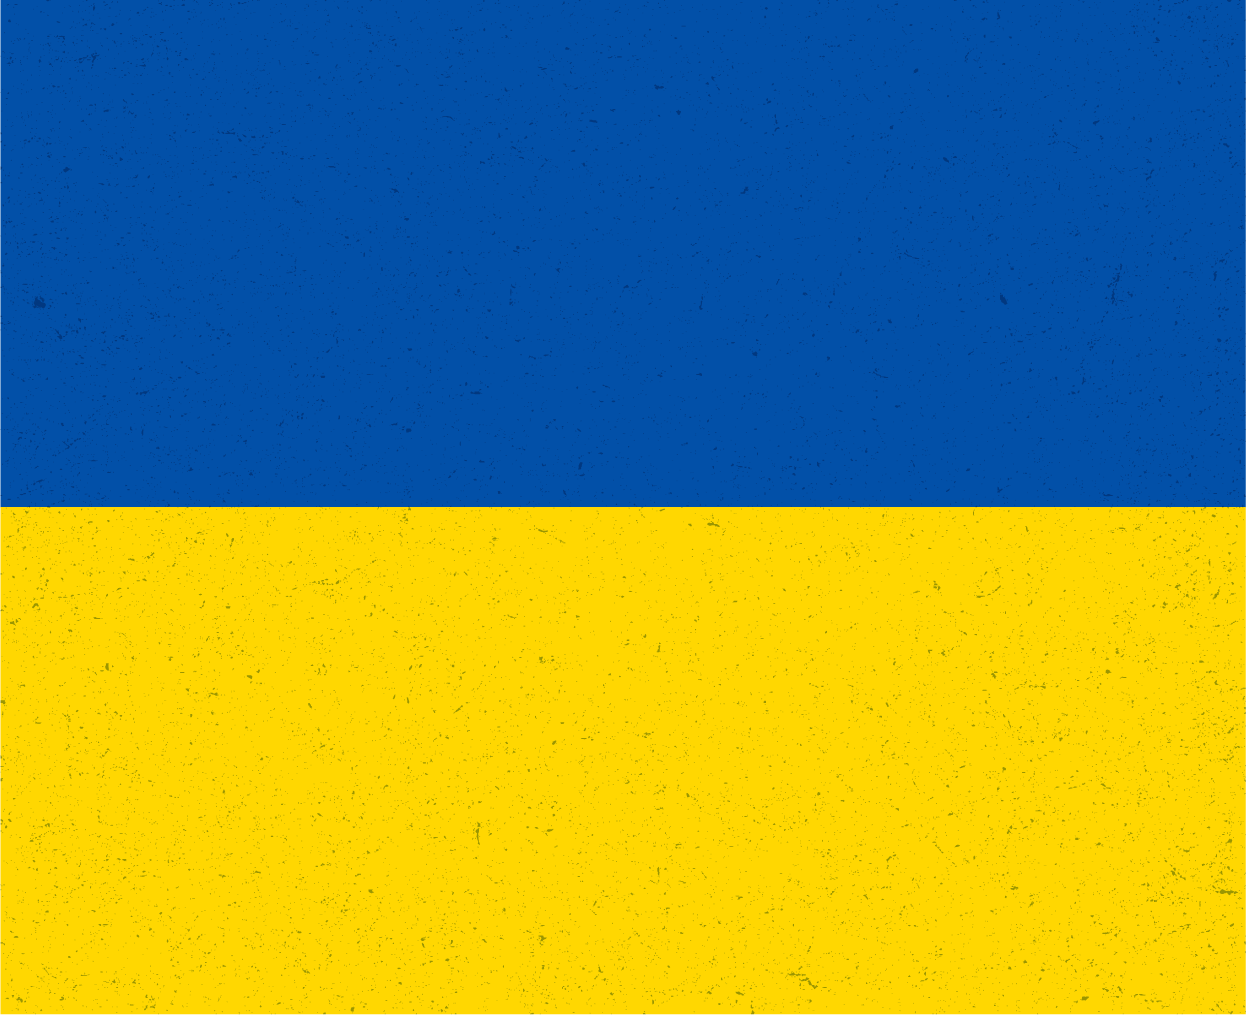 Support for Ukraine_Hero - 1245x1014